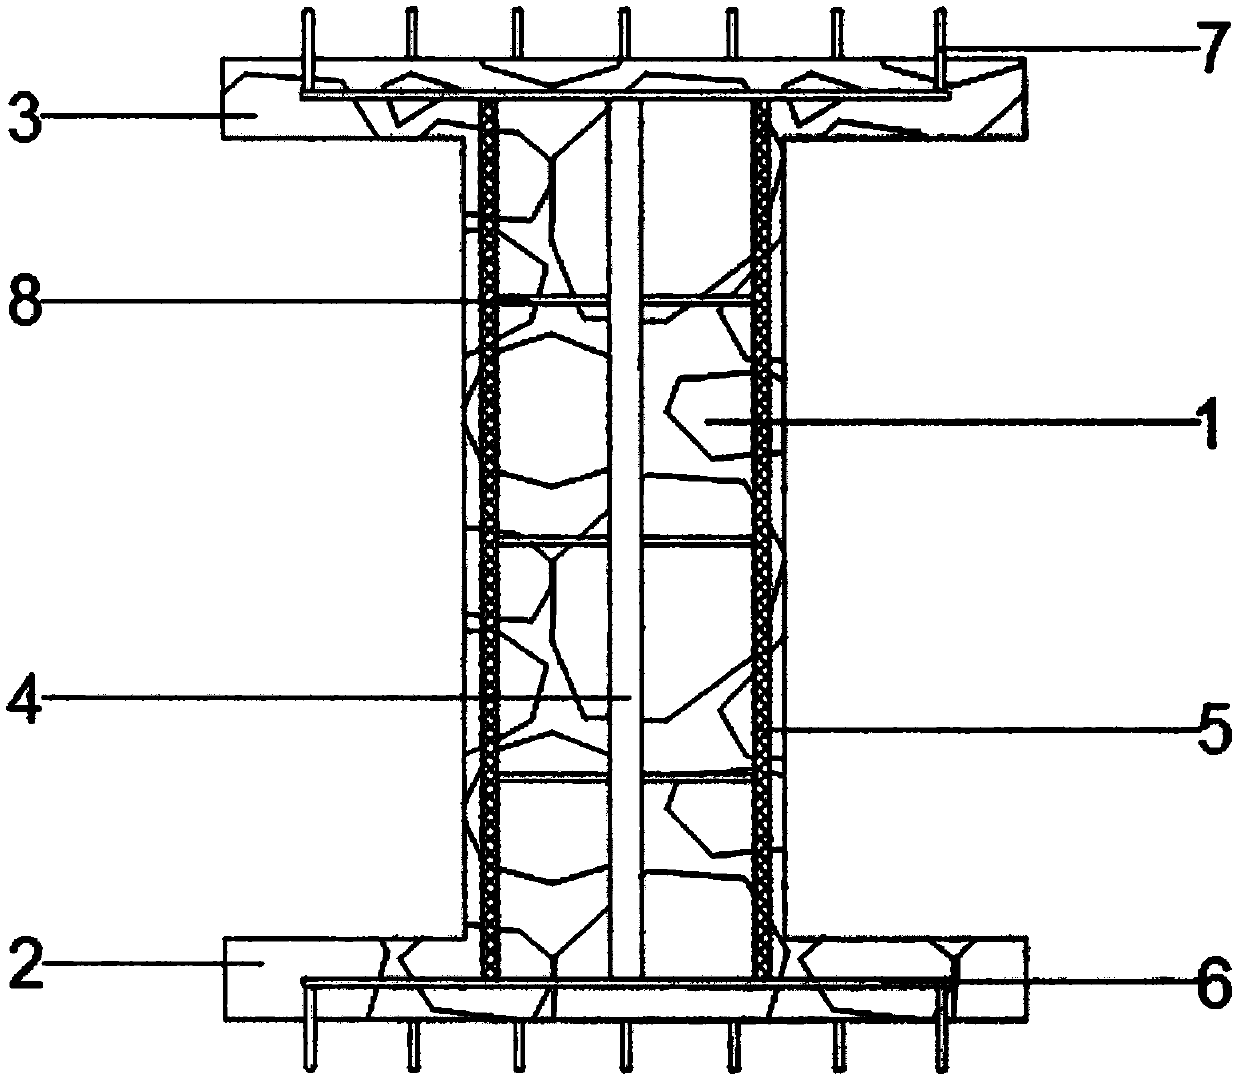 Building prefabricated short column device